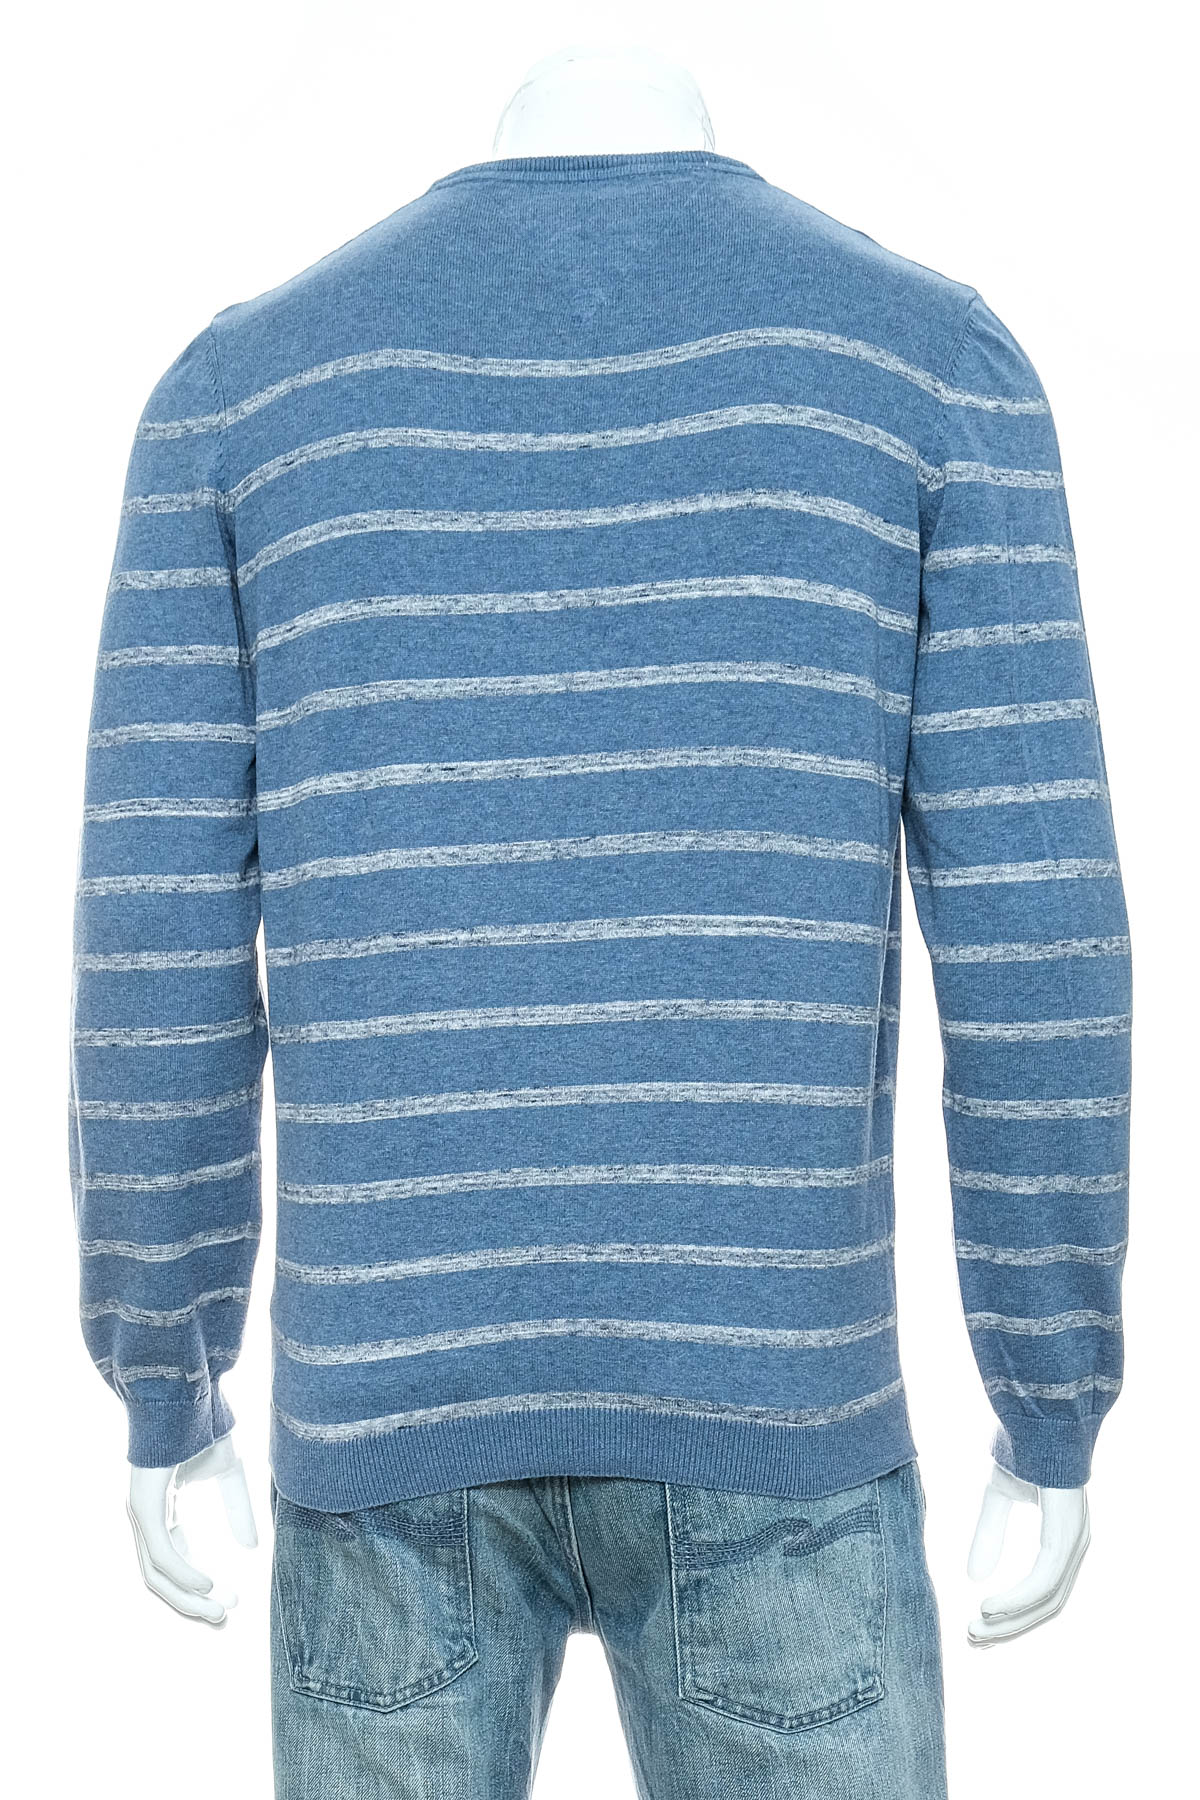 Men's sweater - Charles Vogele - 1